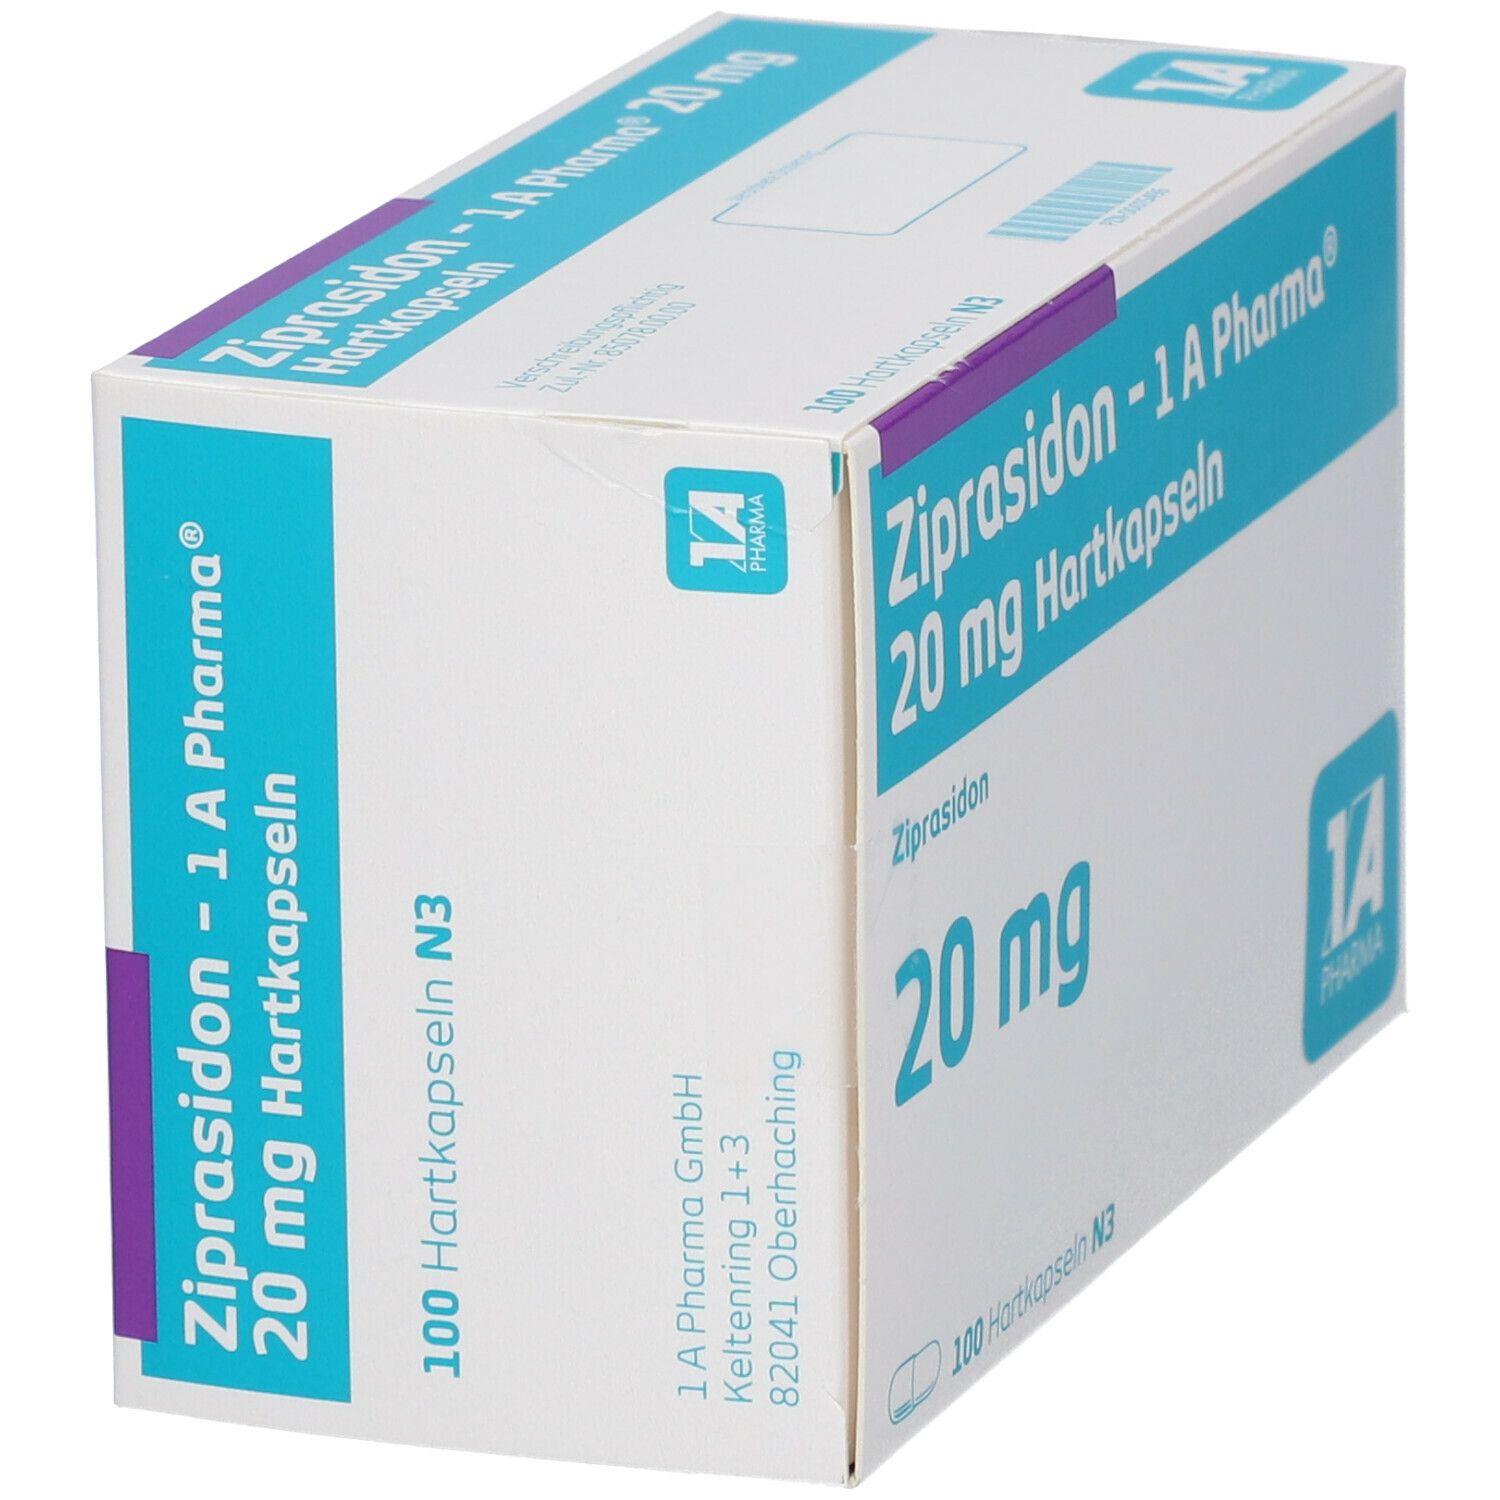 Ziprasidon - 1 A Pharma® 20 mg